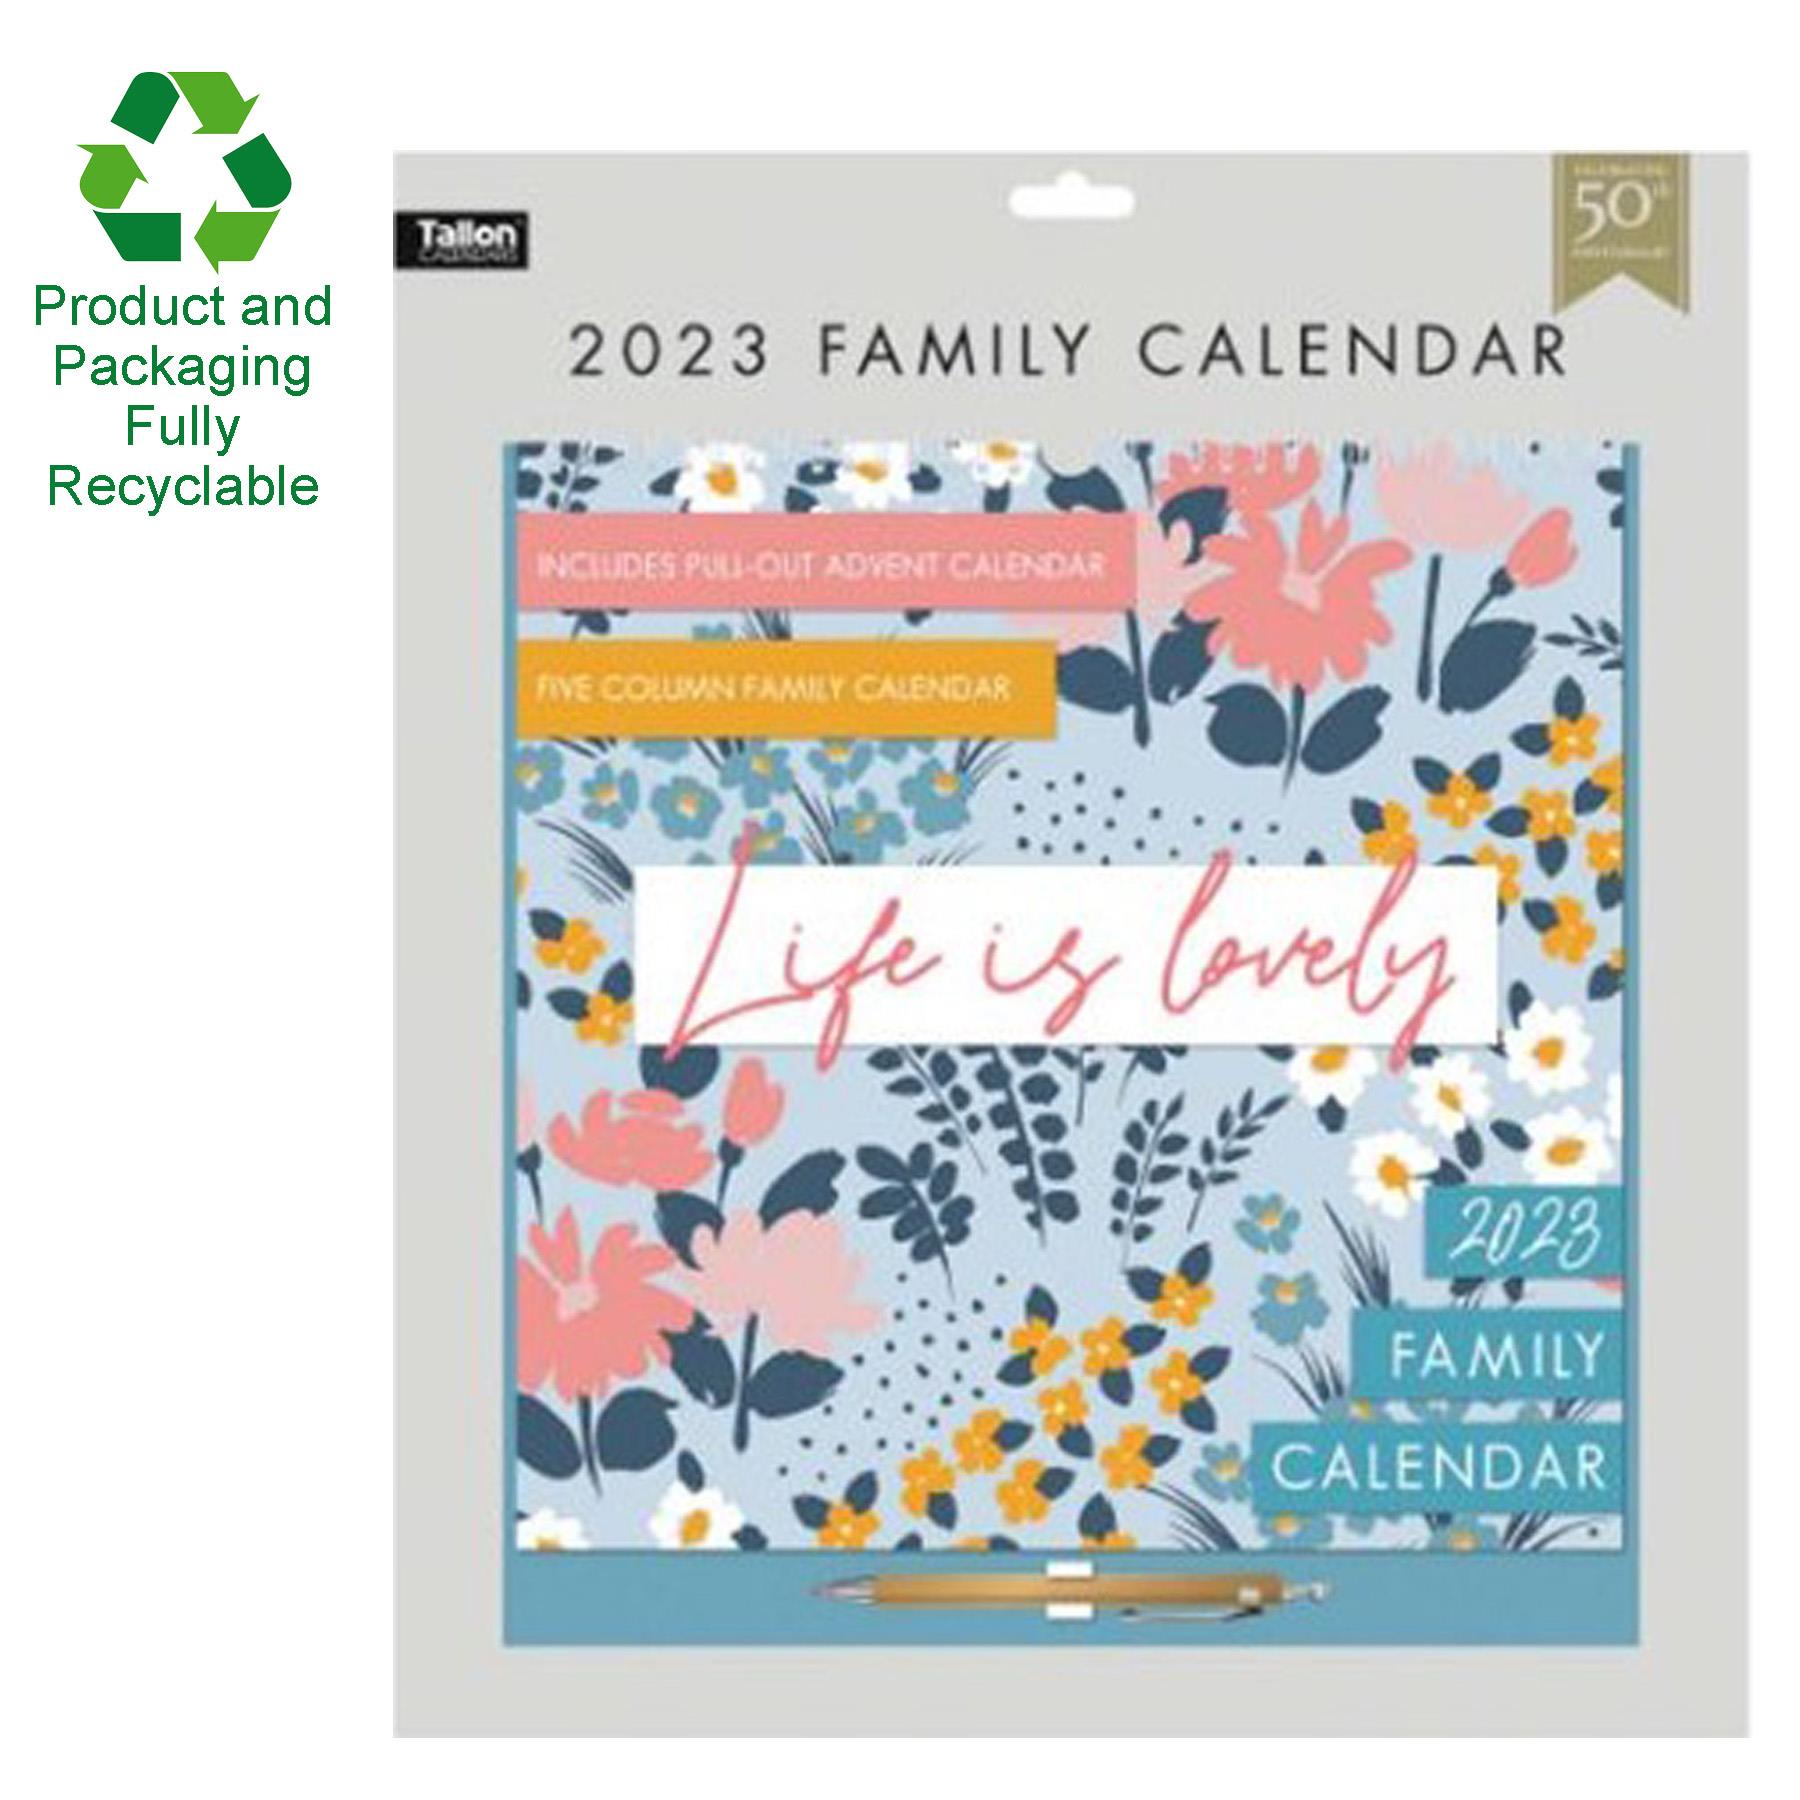 2023 Family 5 Column Calendar with Free Advent Calendar - Flowers Design